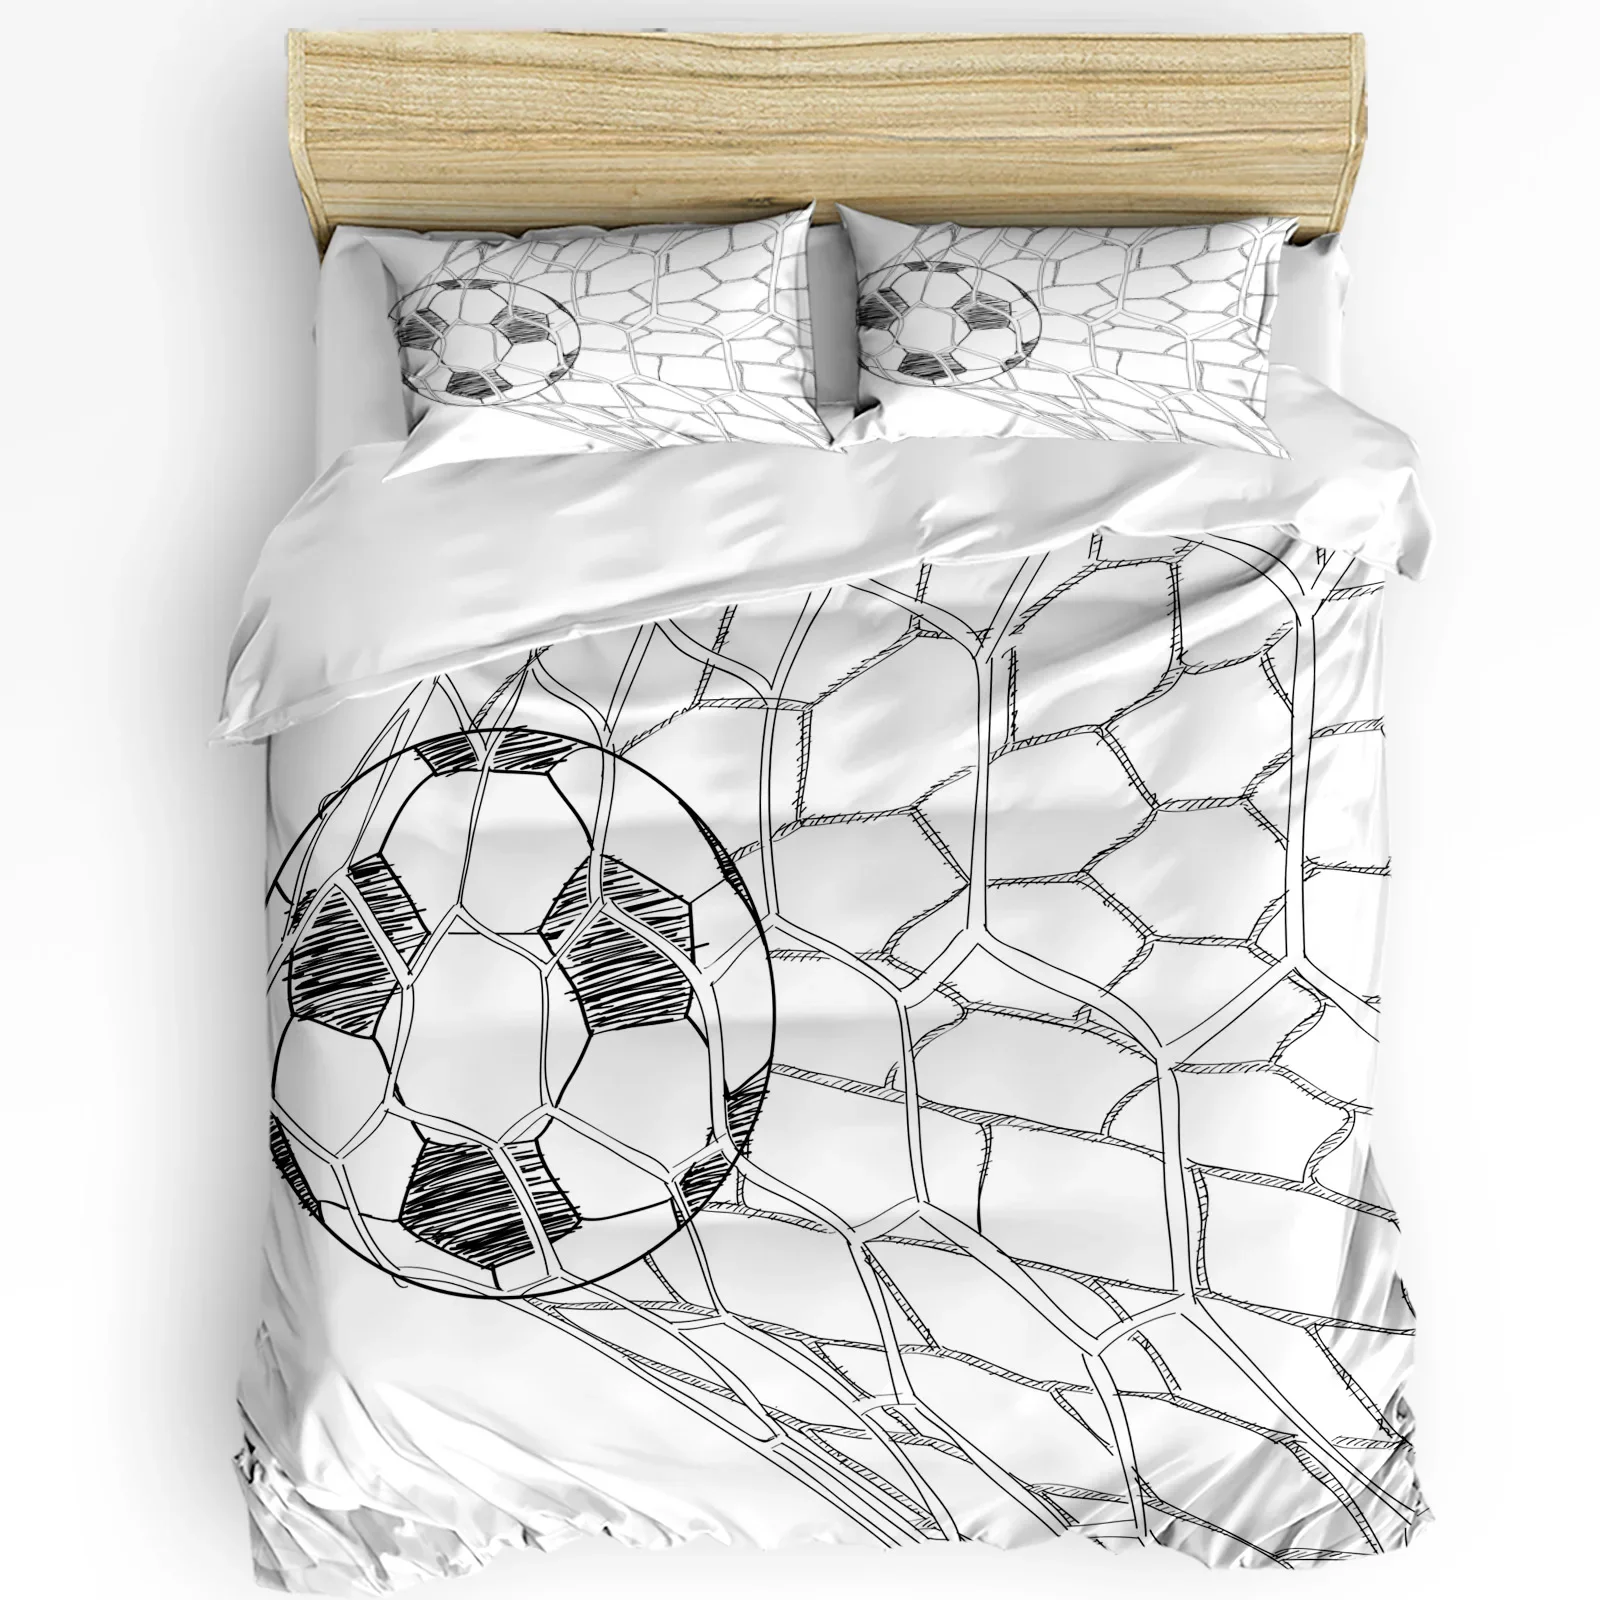 soccer-football-net-sketch-printed-comfort-duvet-cover-pillow-case-home-textile-quilt-cover-boy-kid-teen-girl-3pcs-bedding-set